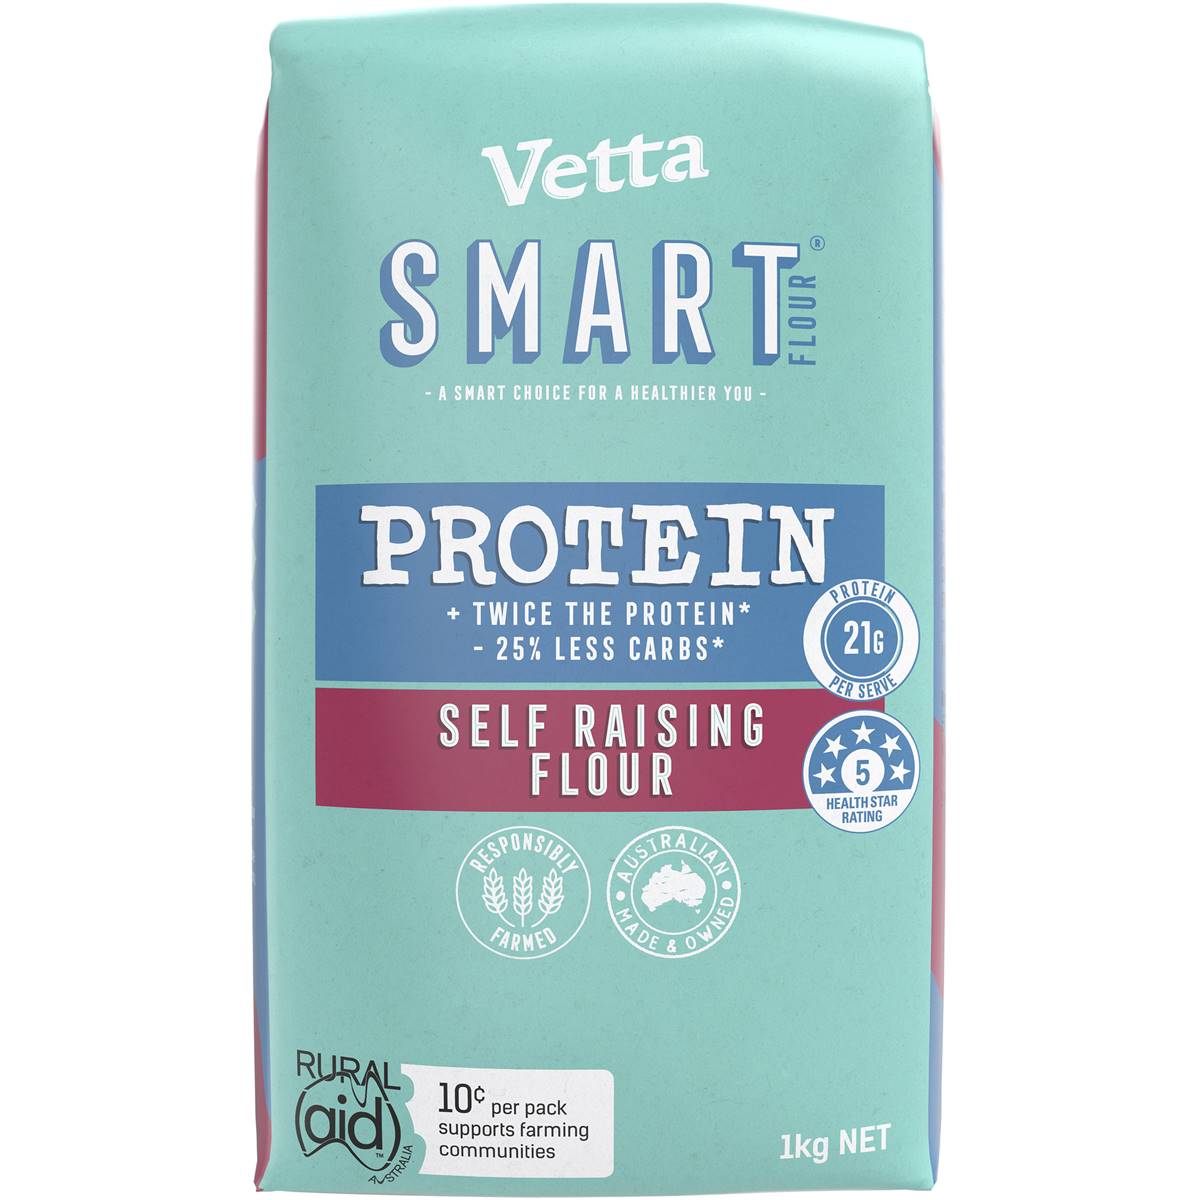 Calories in Vetta Smart Protein Self Raising Flour